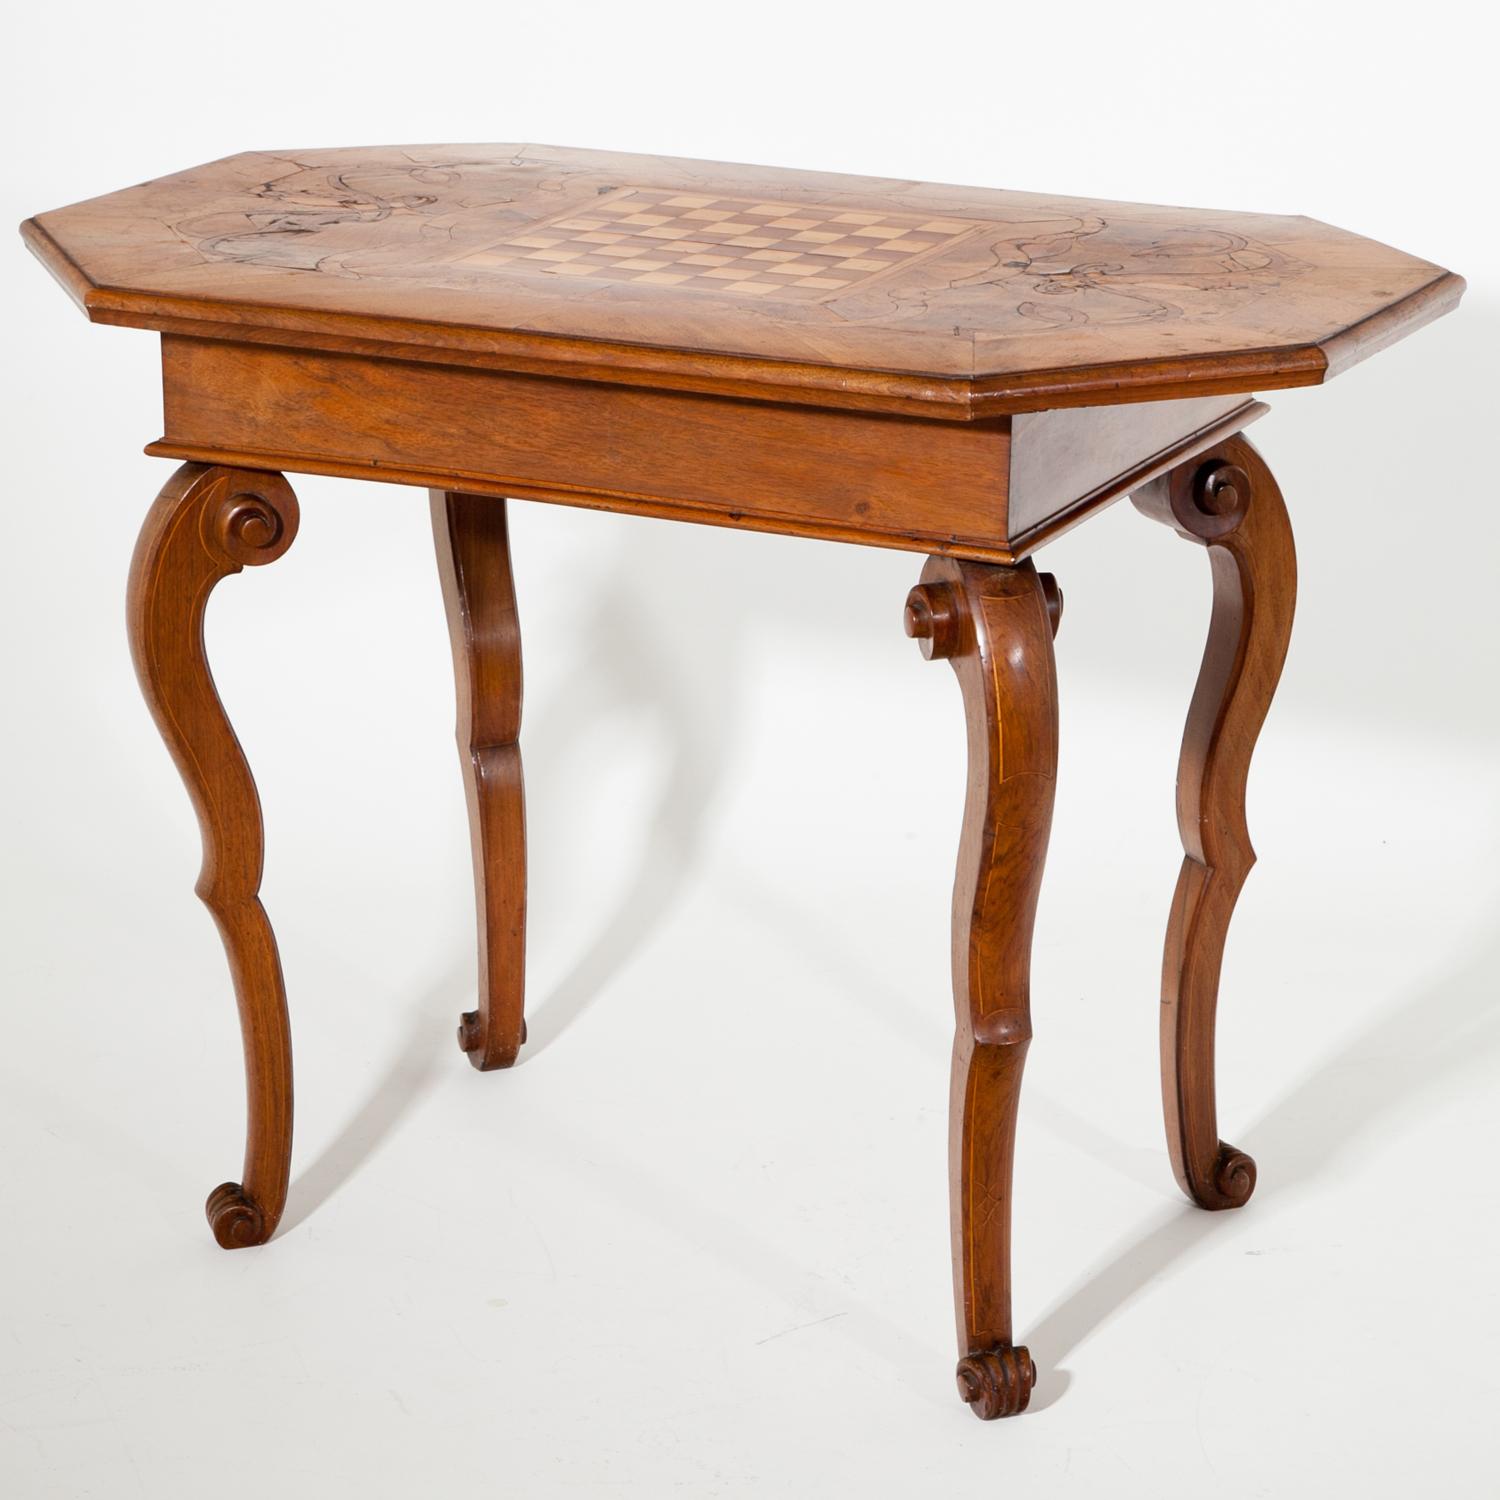 Baroque Table, Late 18th-Early 19th Century (18. Jahrhundert)